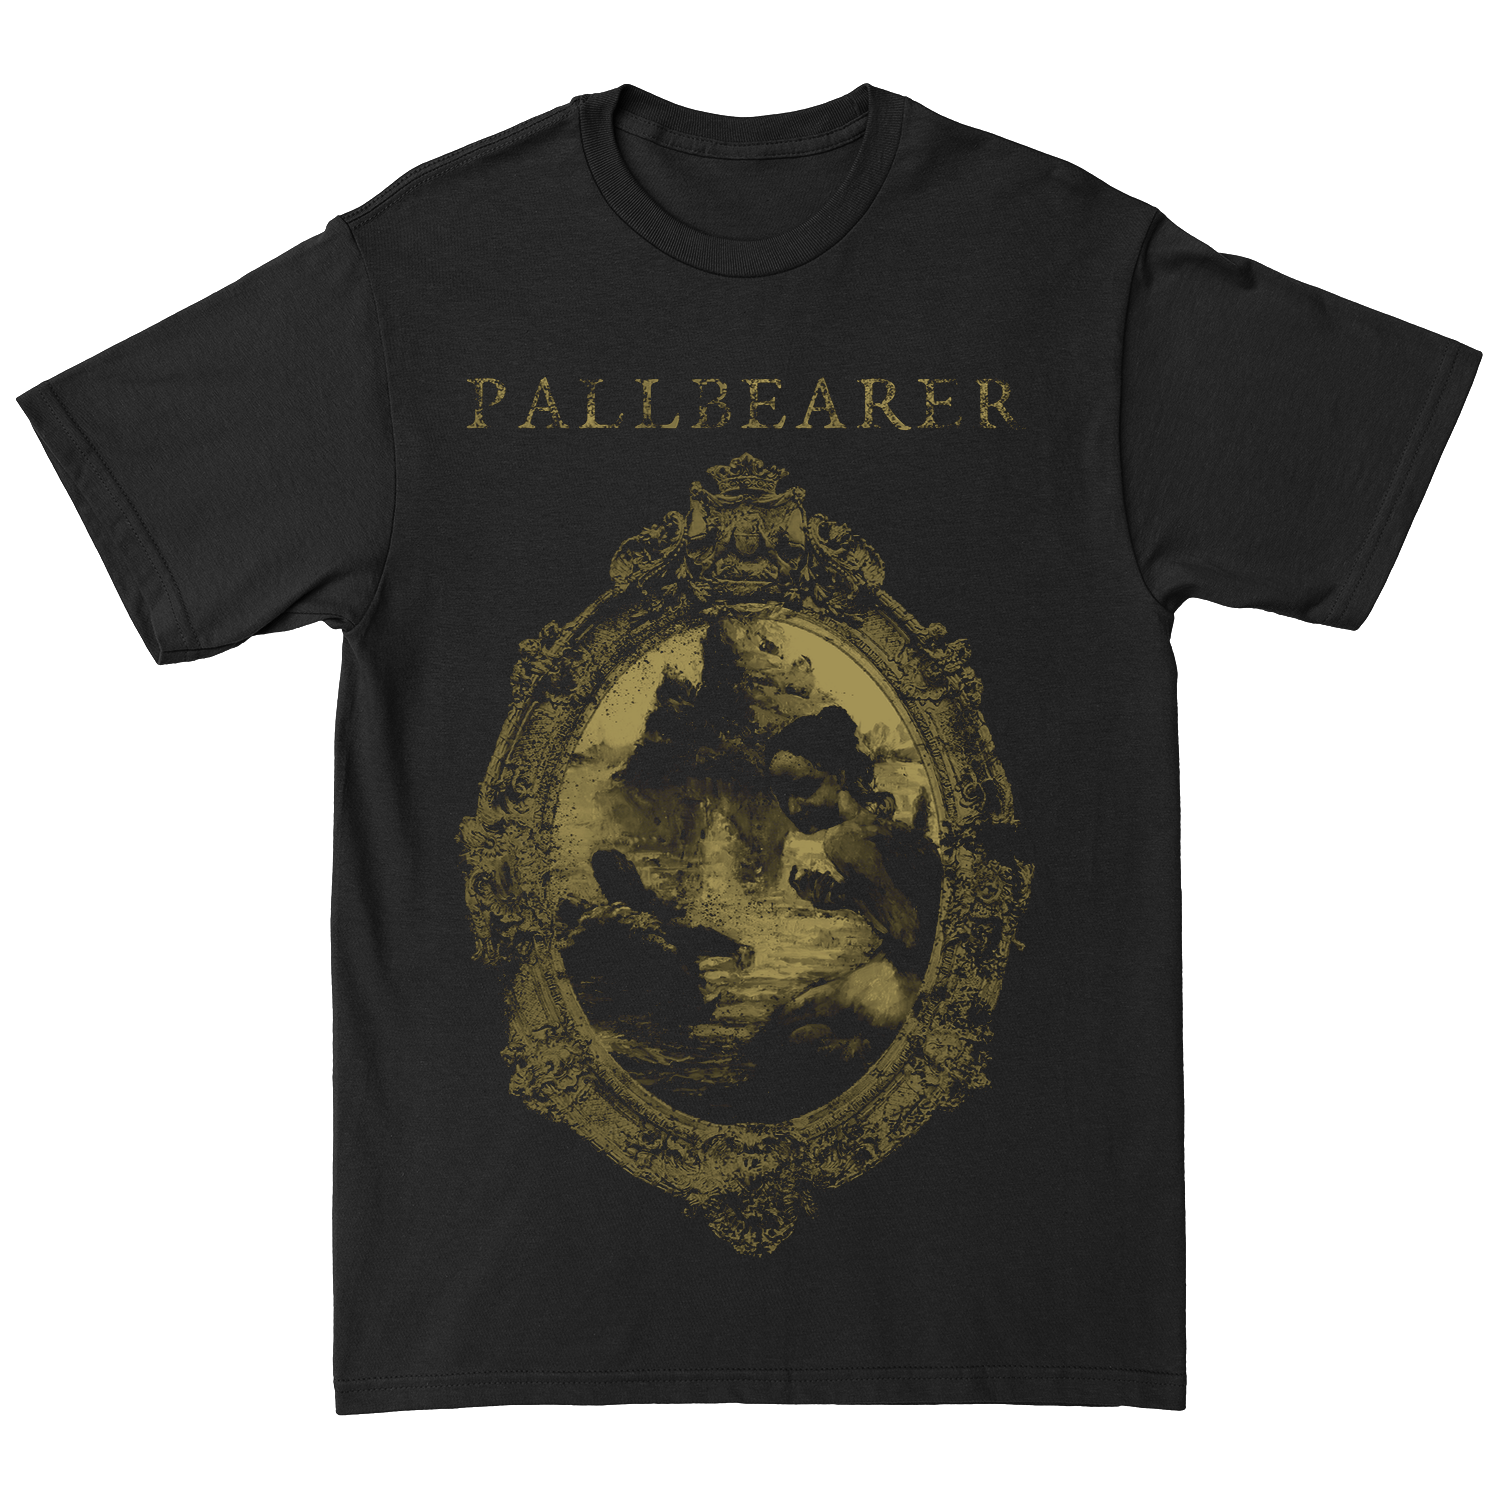 PALLBEARER "Atlantis" Black T-Shirt (Final Run)